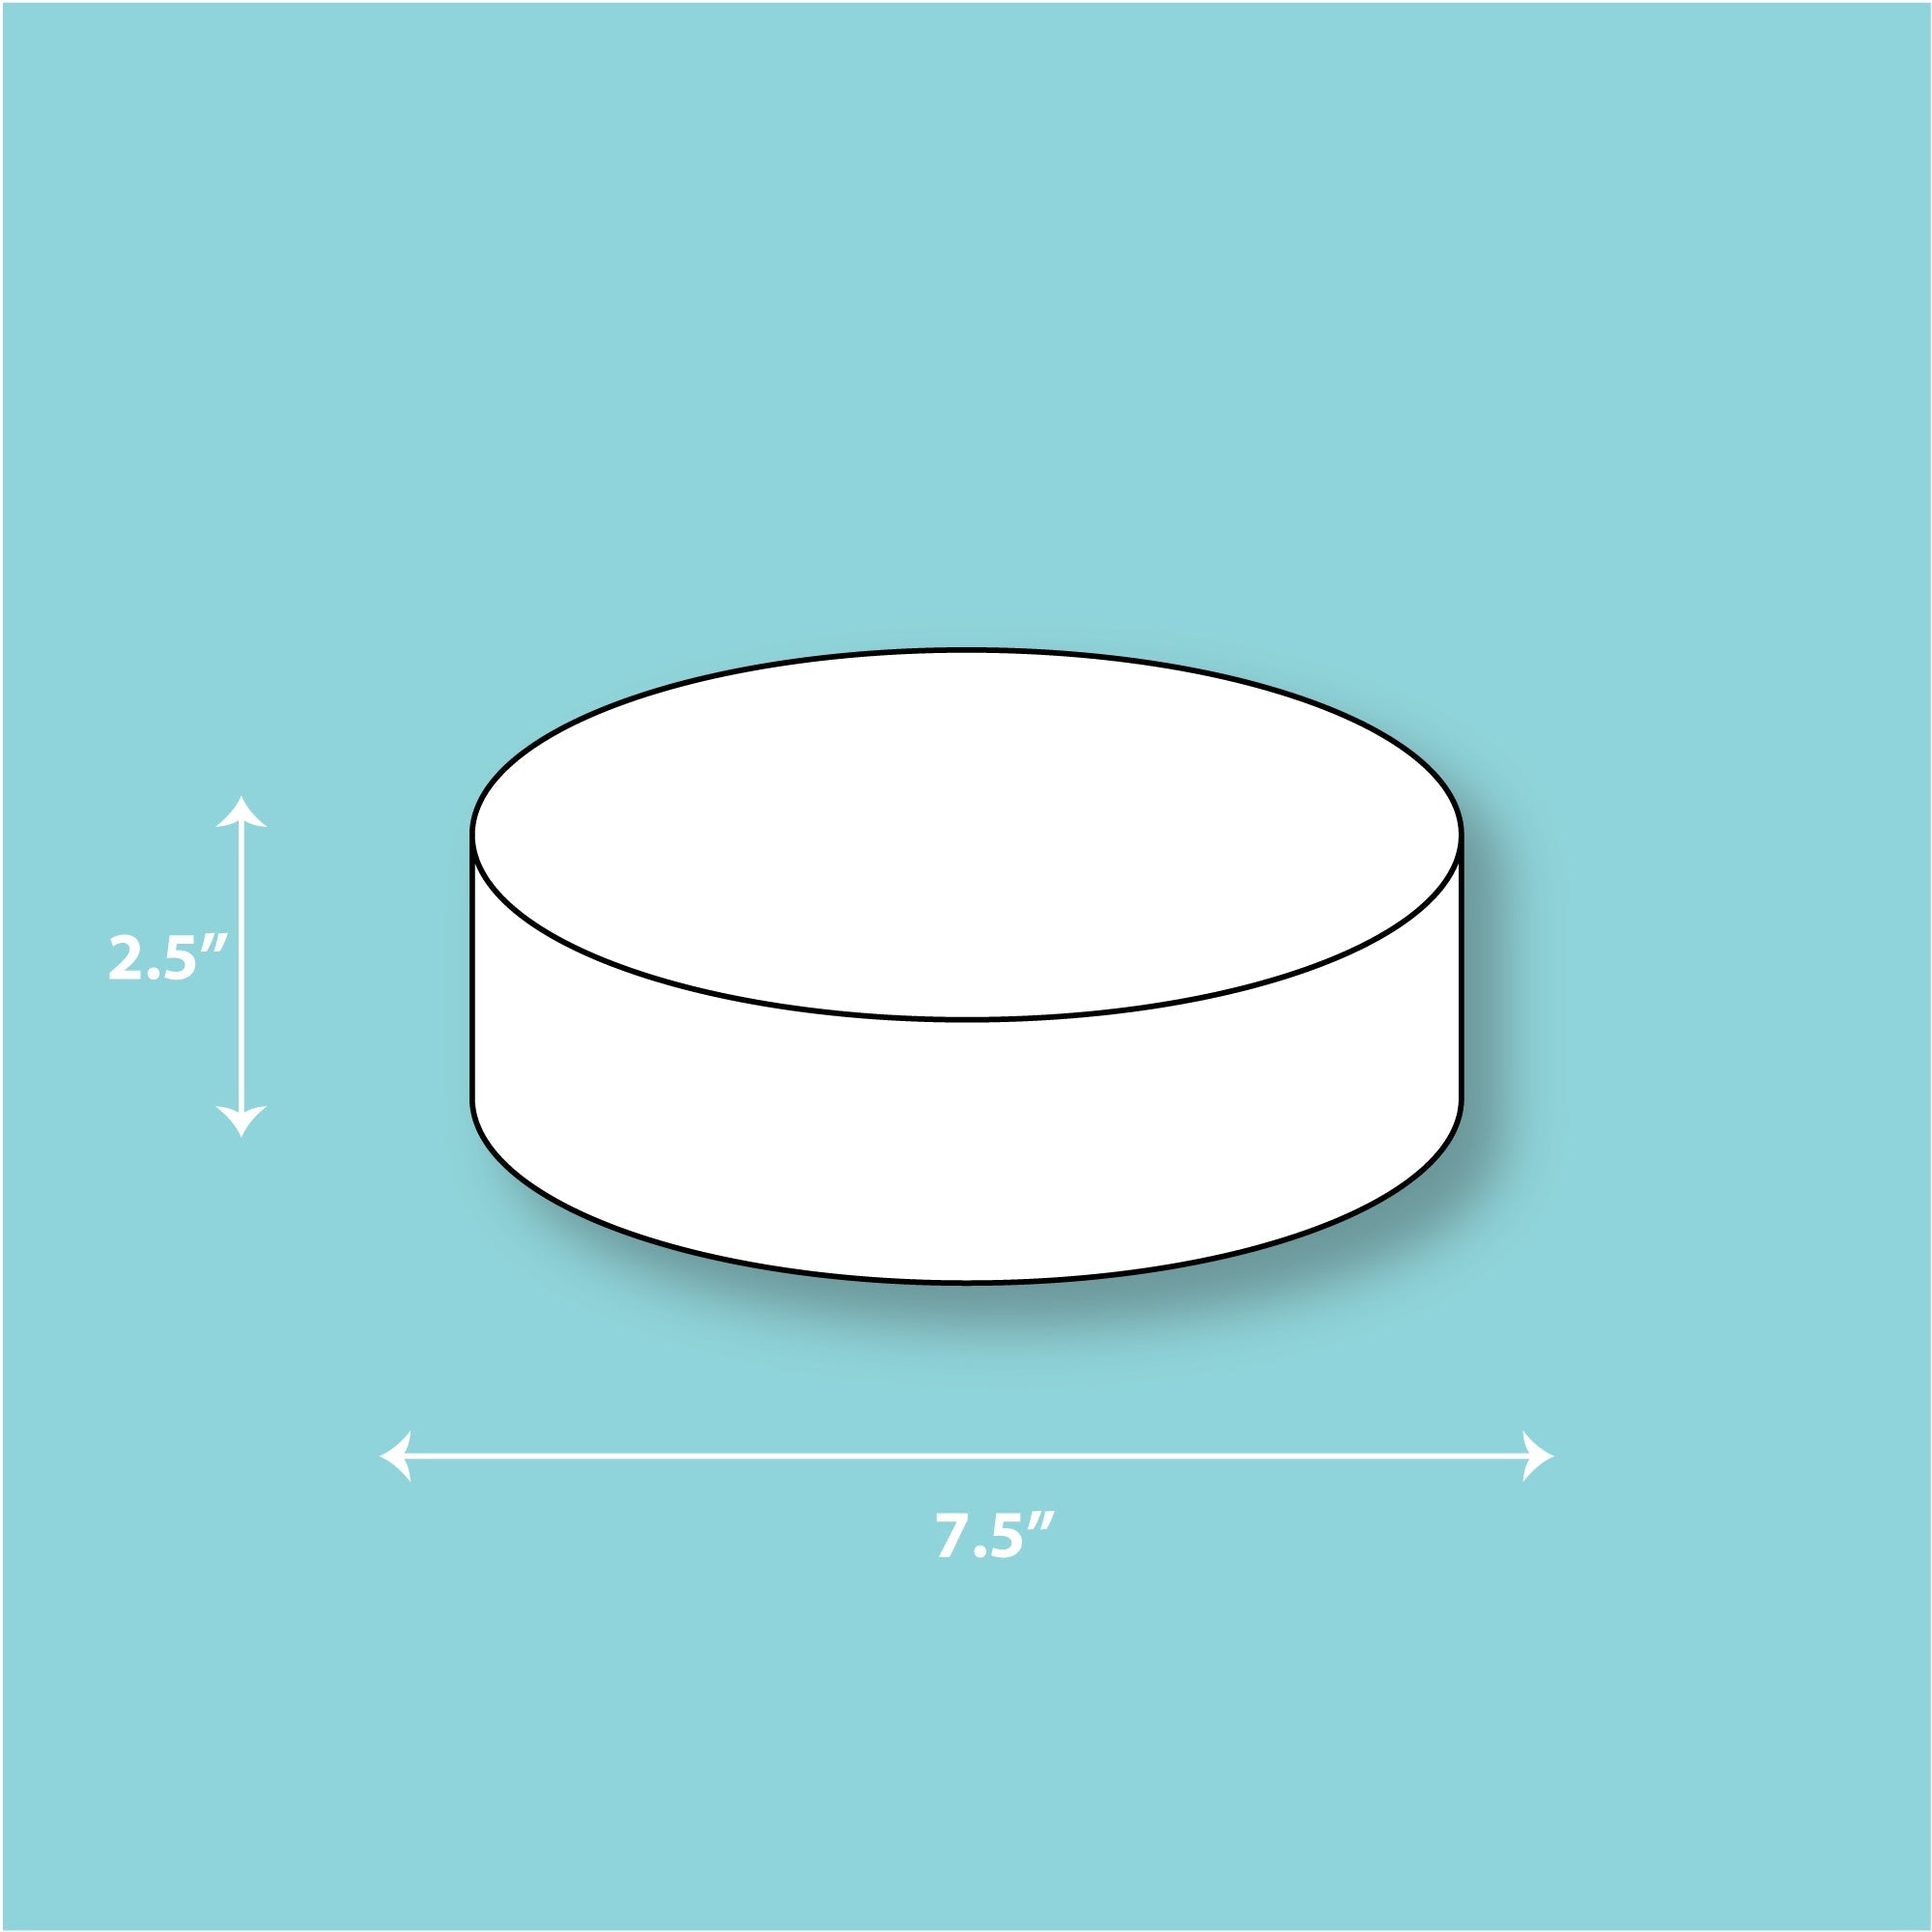 7.5" x 2.5" Silicone Round Circle Mold